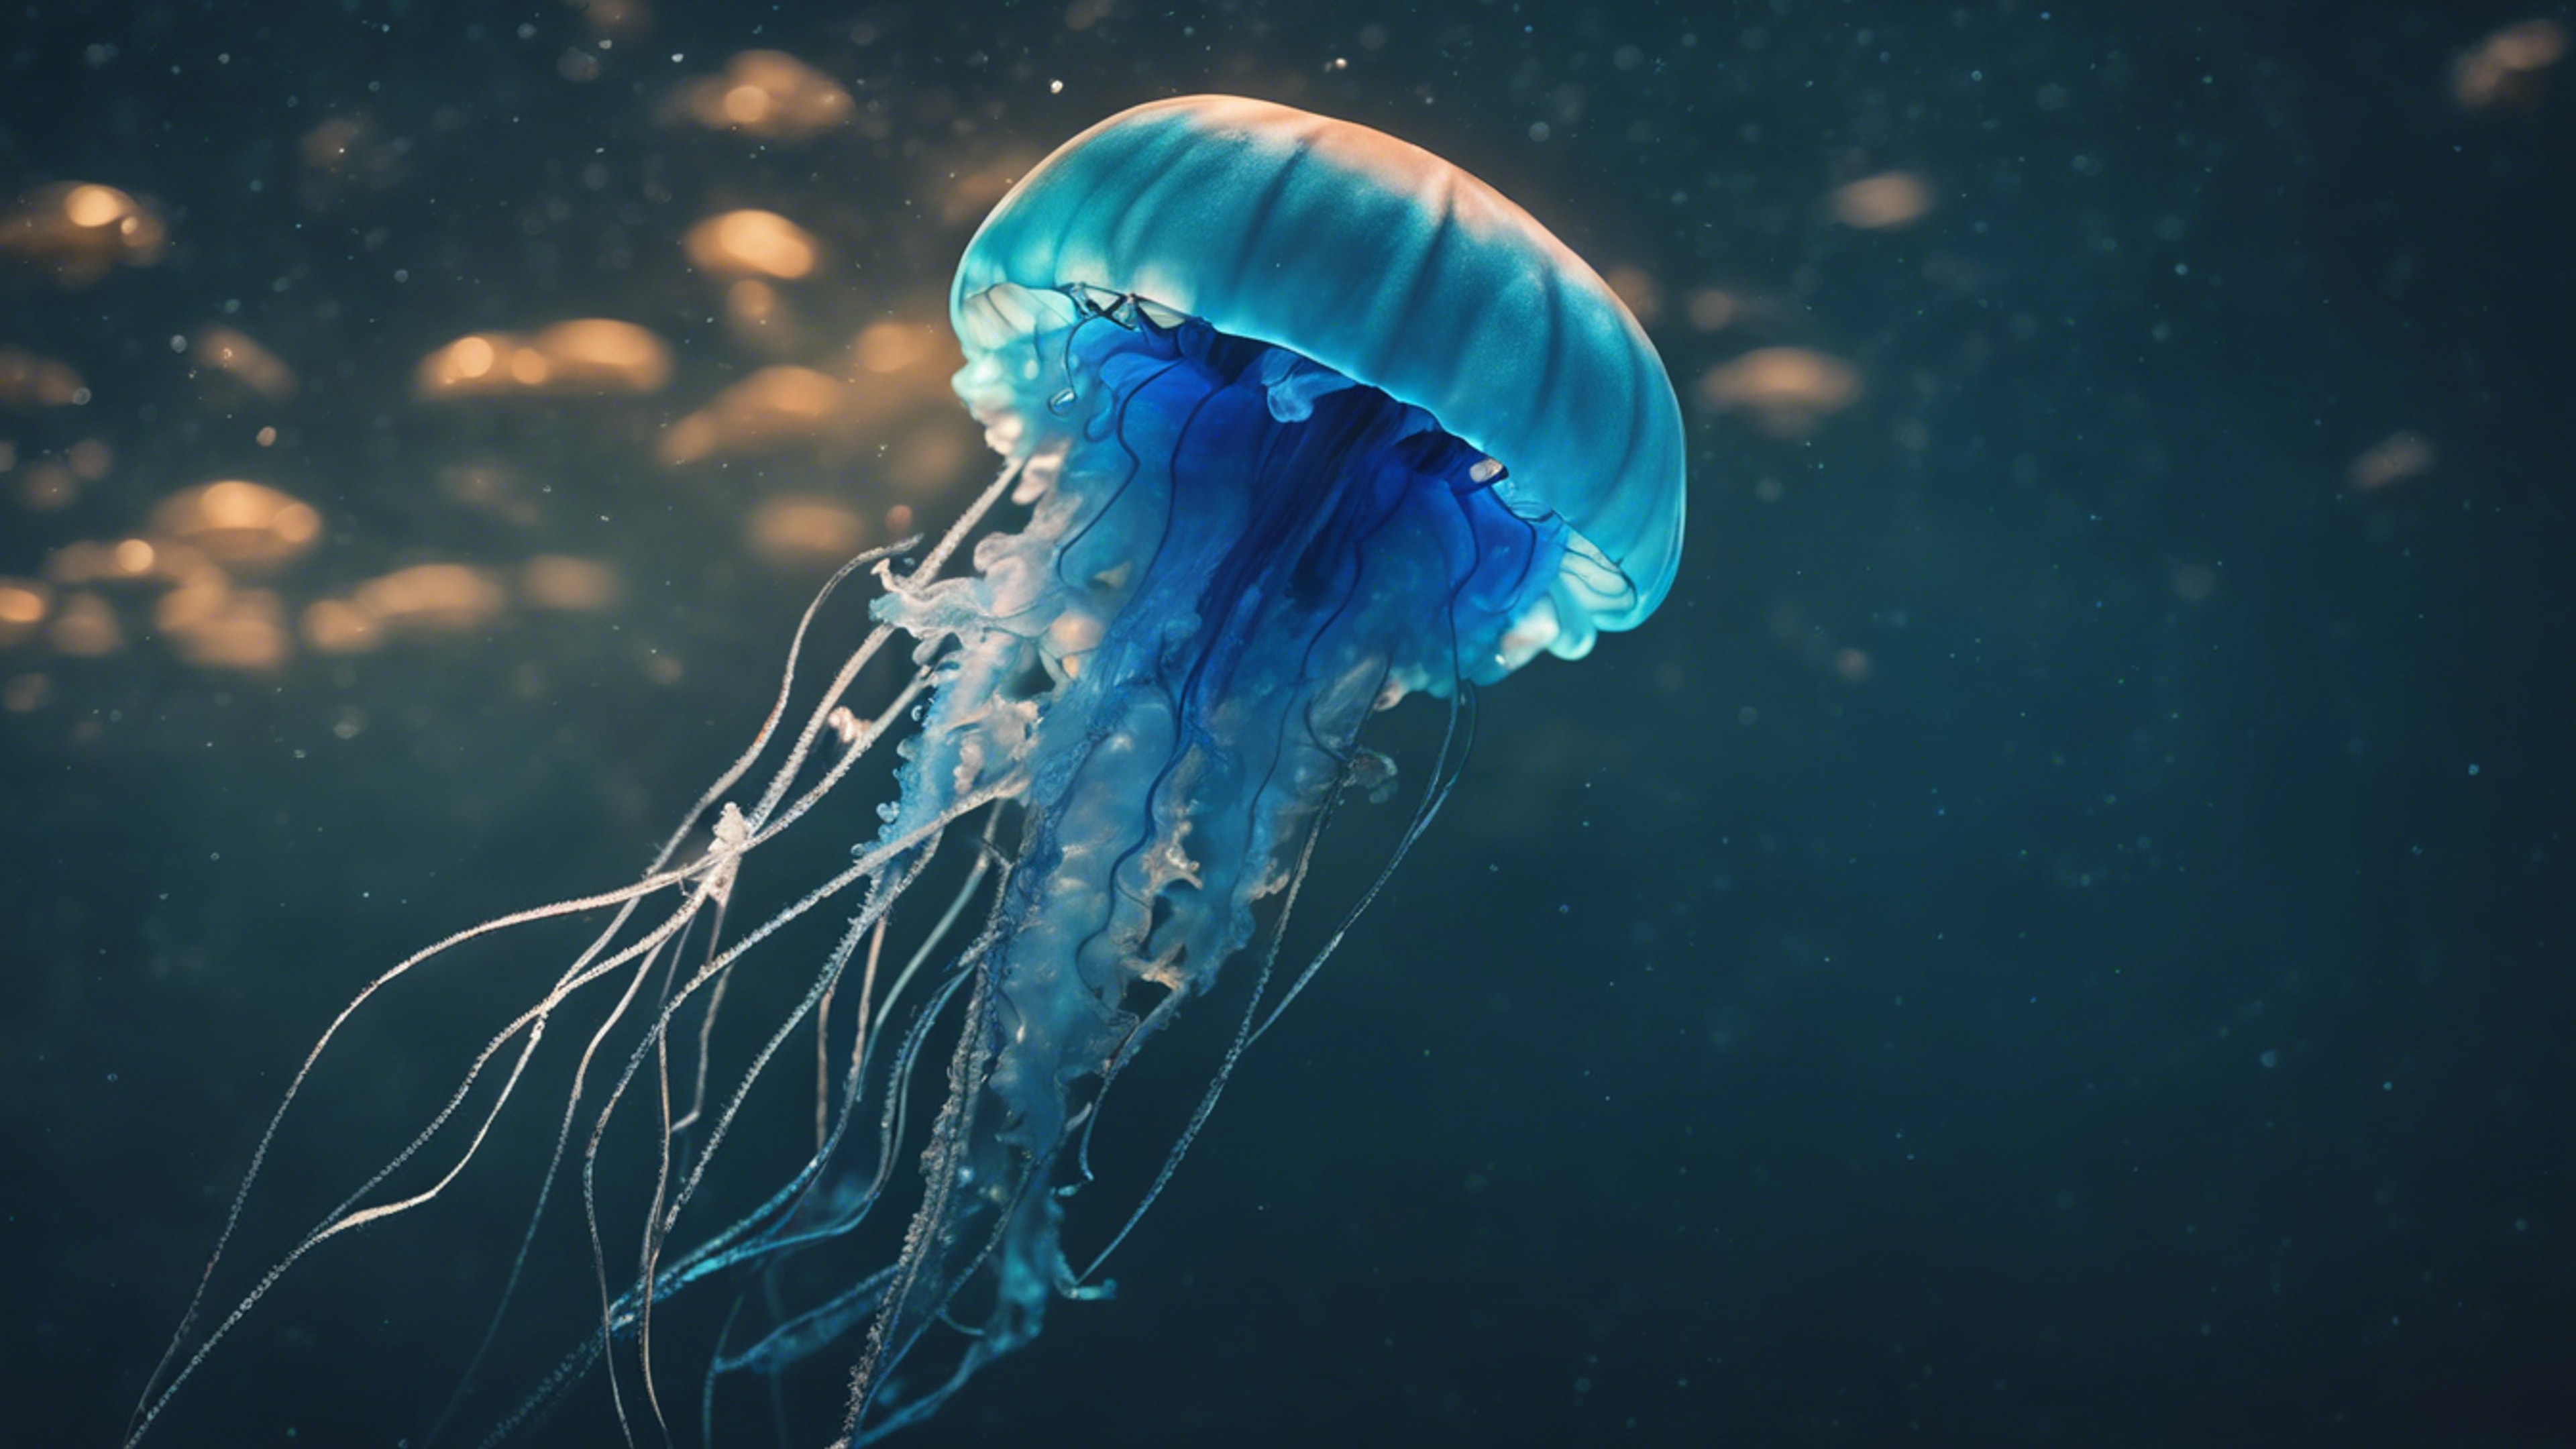 A neon blue jellyfish gracefully floating in the dark ocean depths. Hintergrund[de52a1967abe4ca3a1c8]